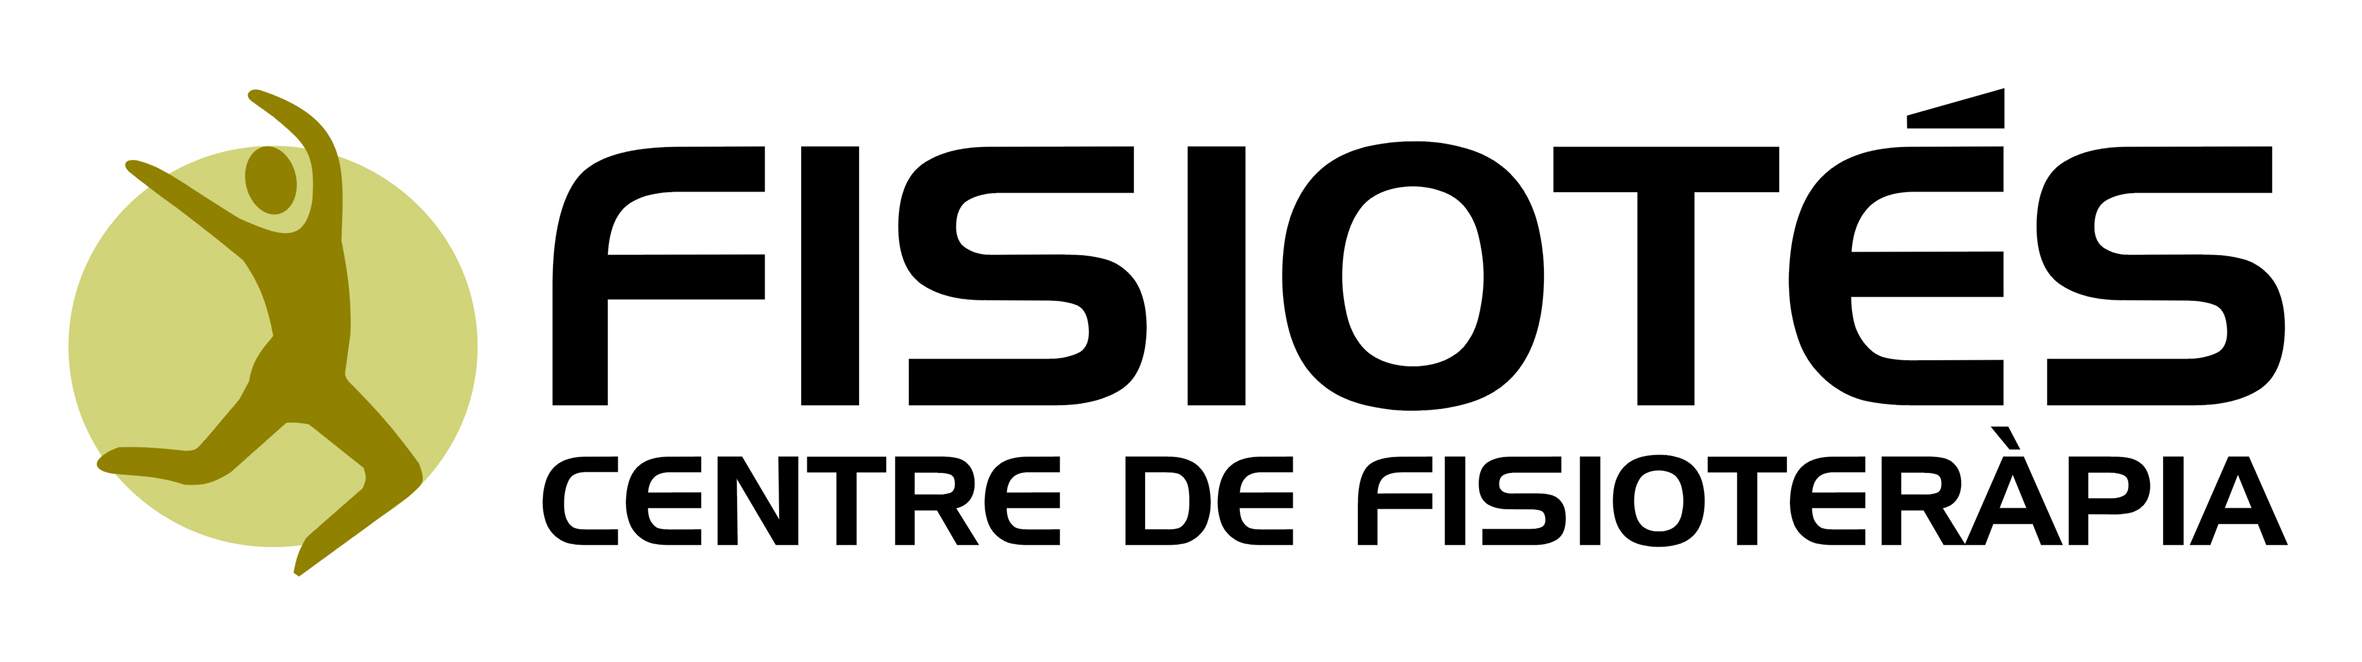 Logotipo de la clínica FISIOTÉS